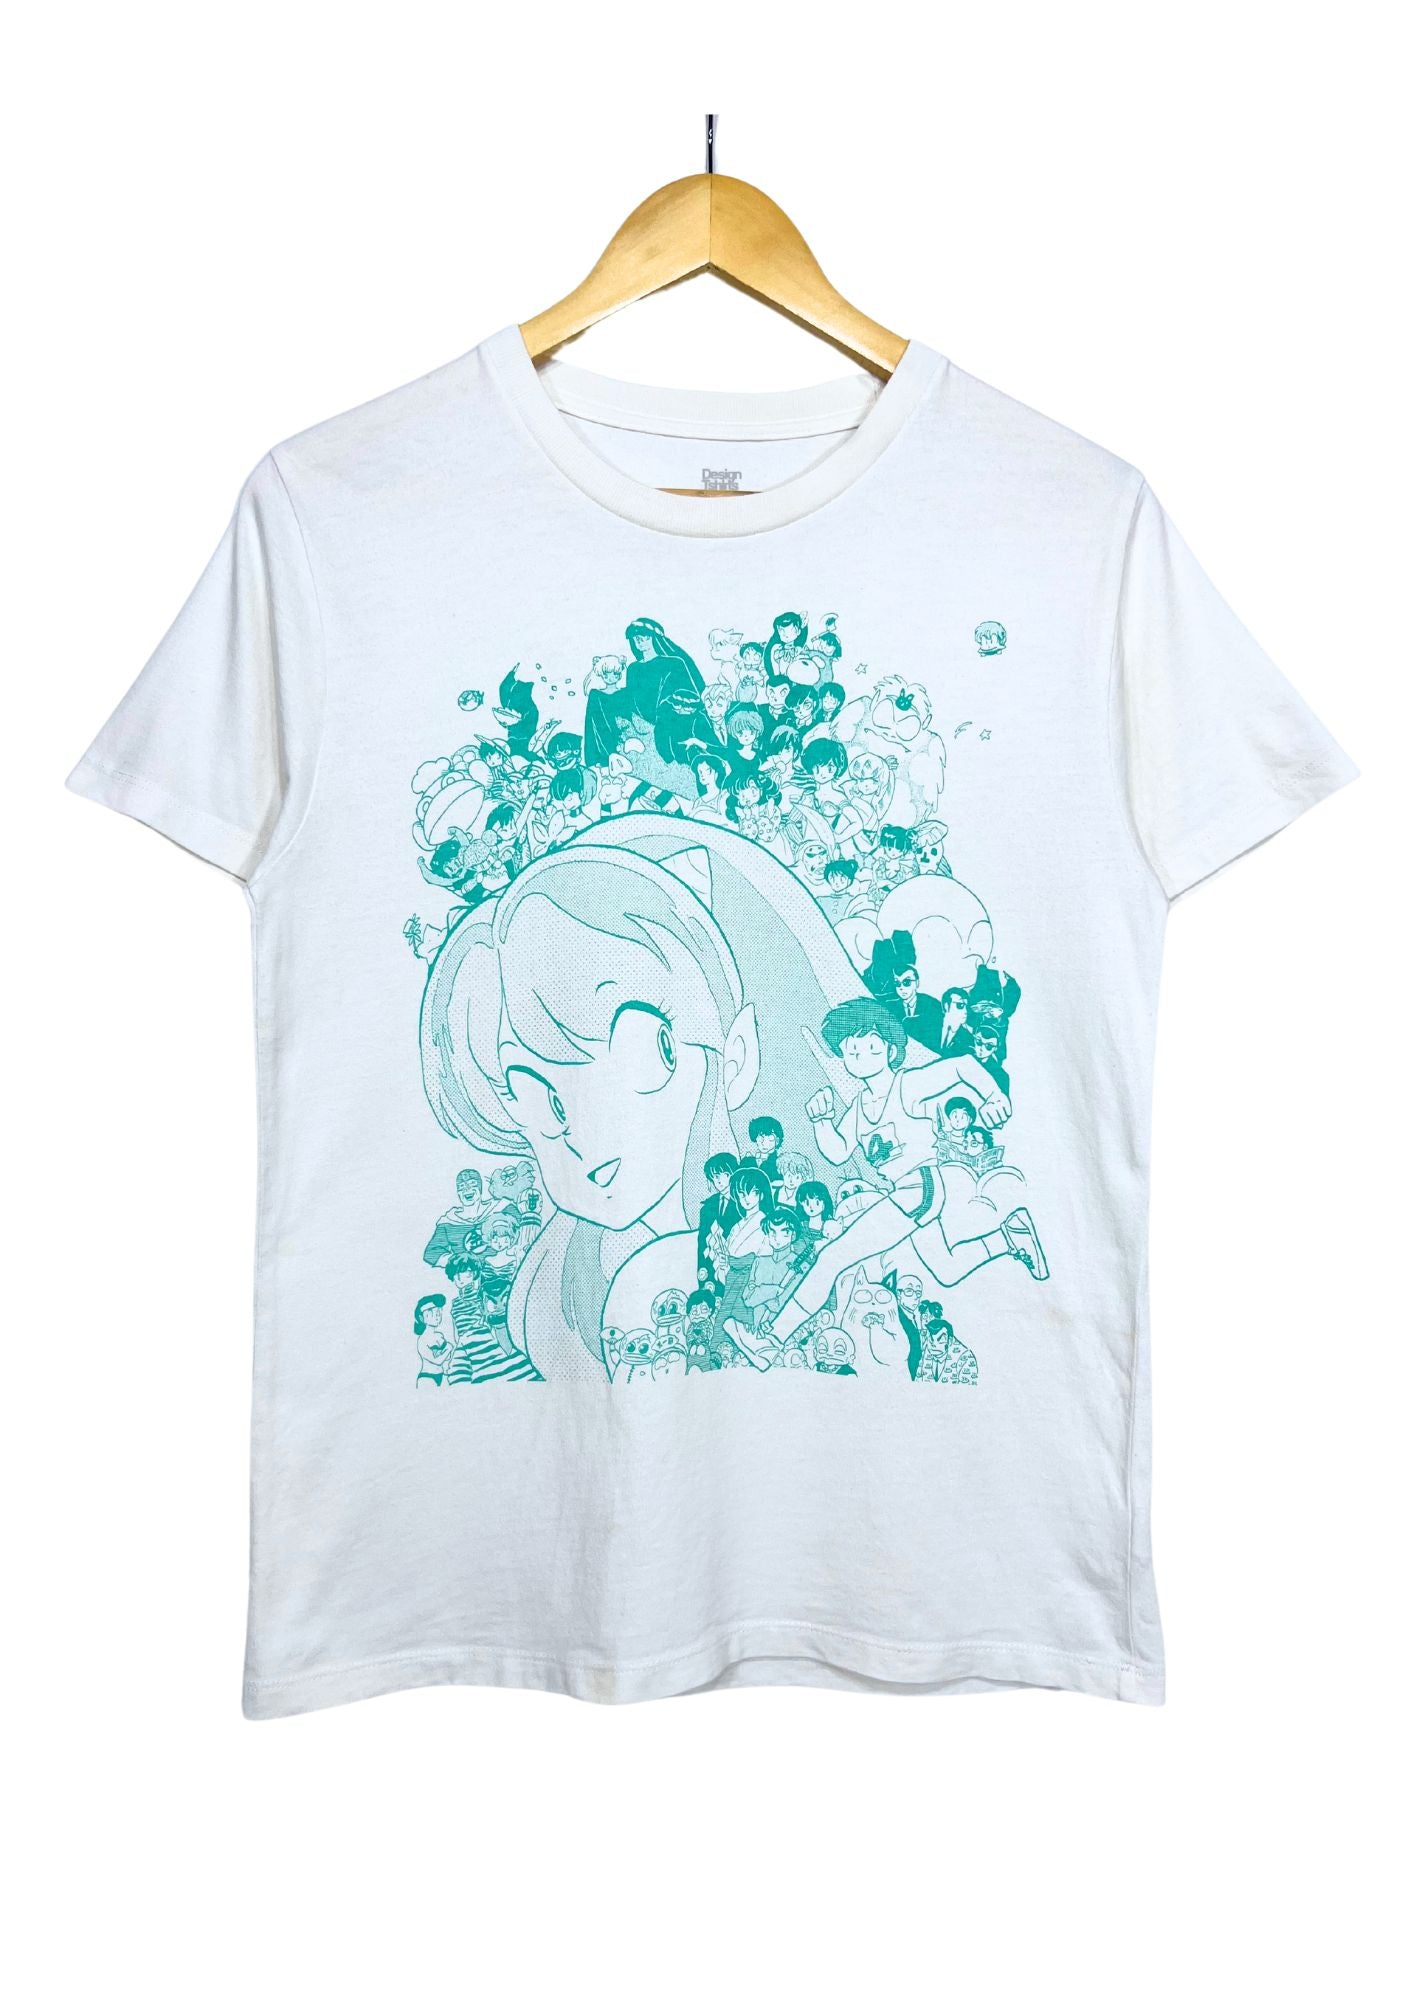 2016 Urusei Yatsura x Graniph All Characters T-shirt